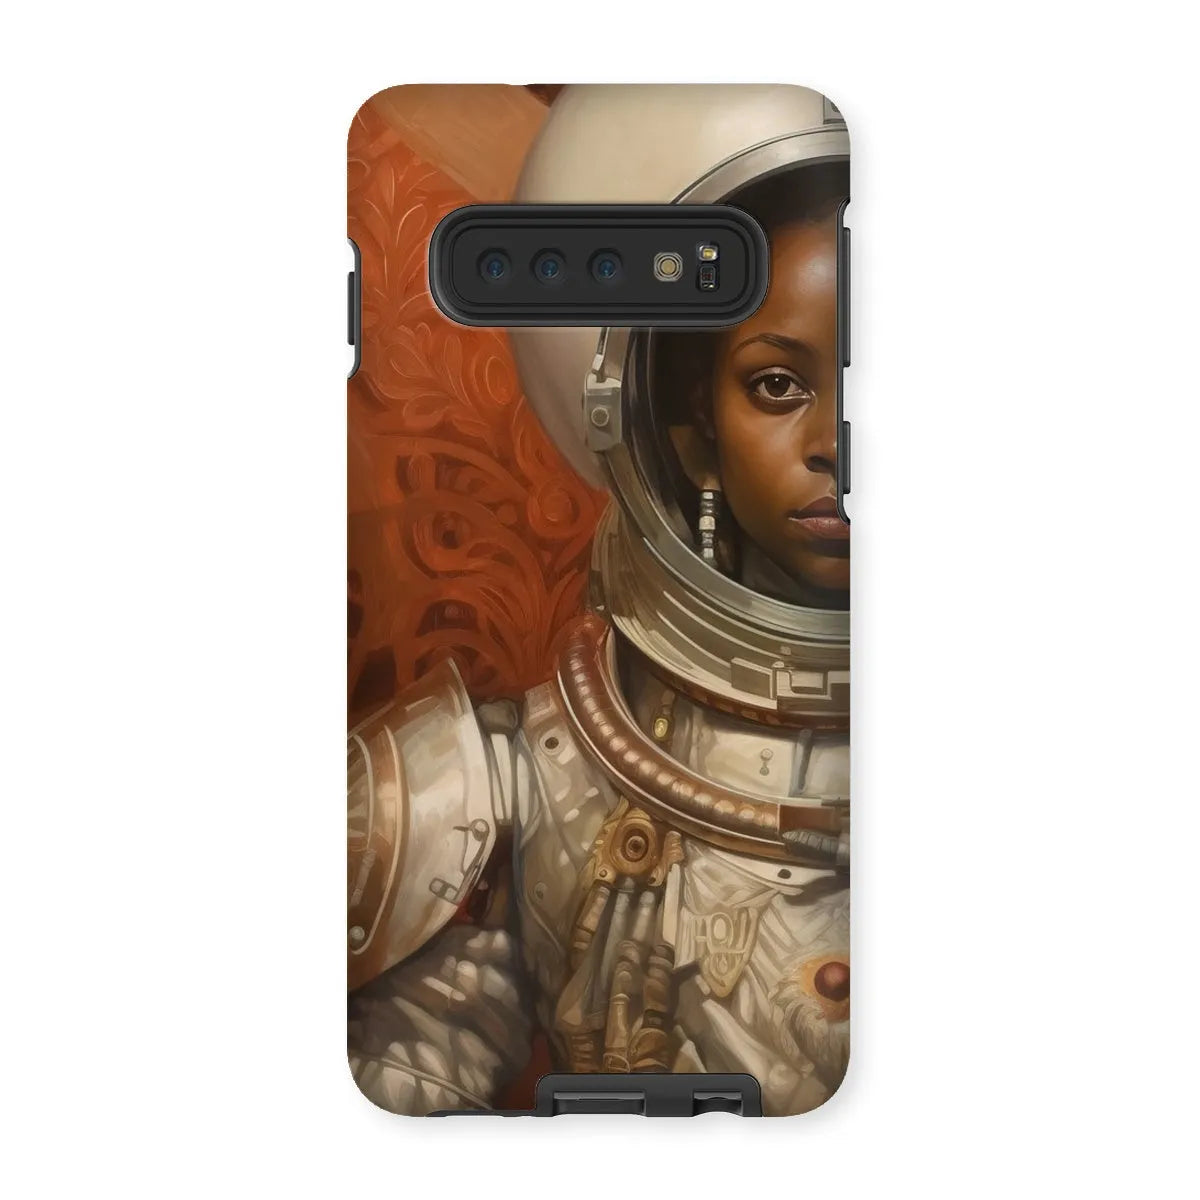 Ava - Black Lesbian Astronaut Aesthetic Phone Case - Samsung Galaxy S10 / Matte - Mobile Phone Cases - Aesthetic Art